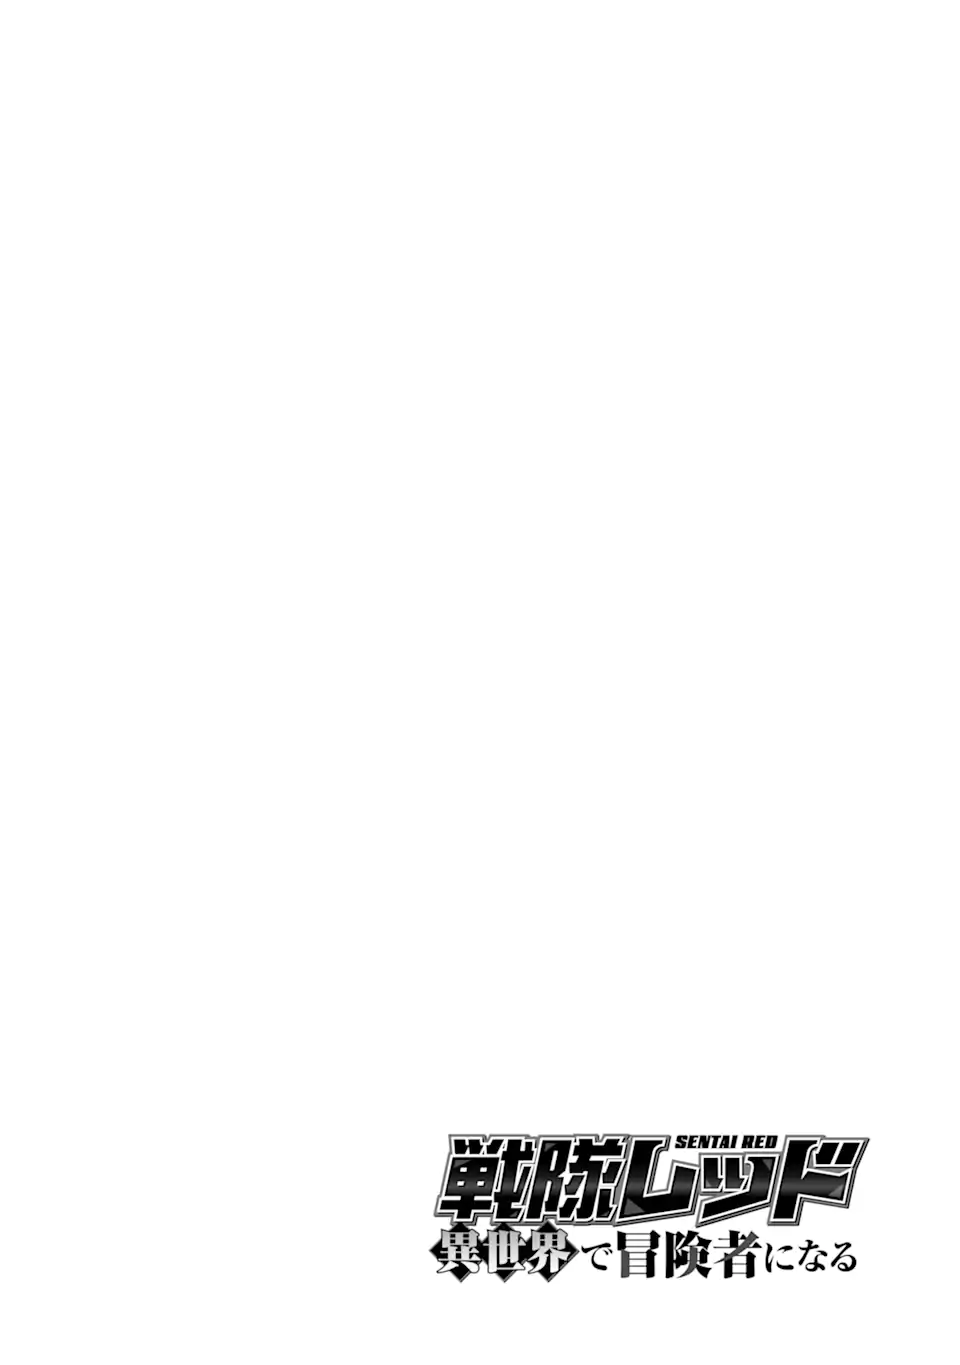 Sentai Red Isekai de Boukensha ni Naru - Chapter 24.1 - Page 2